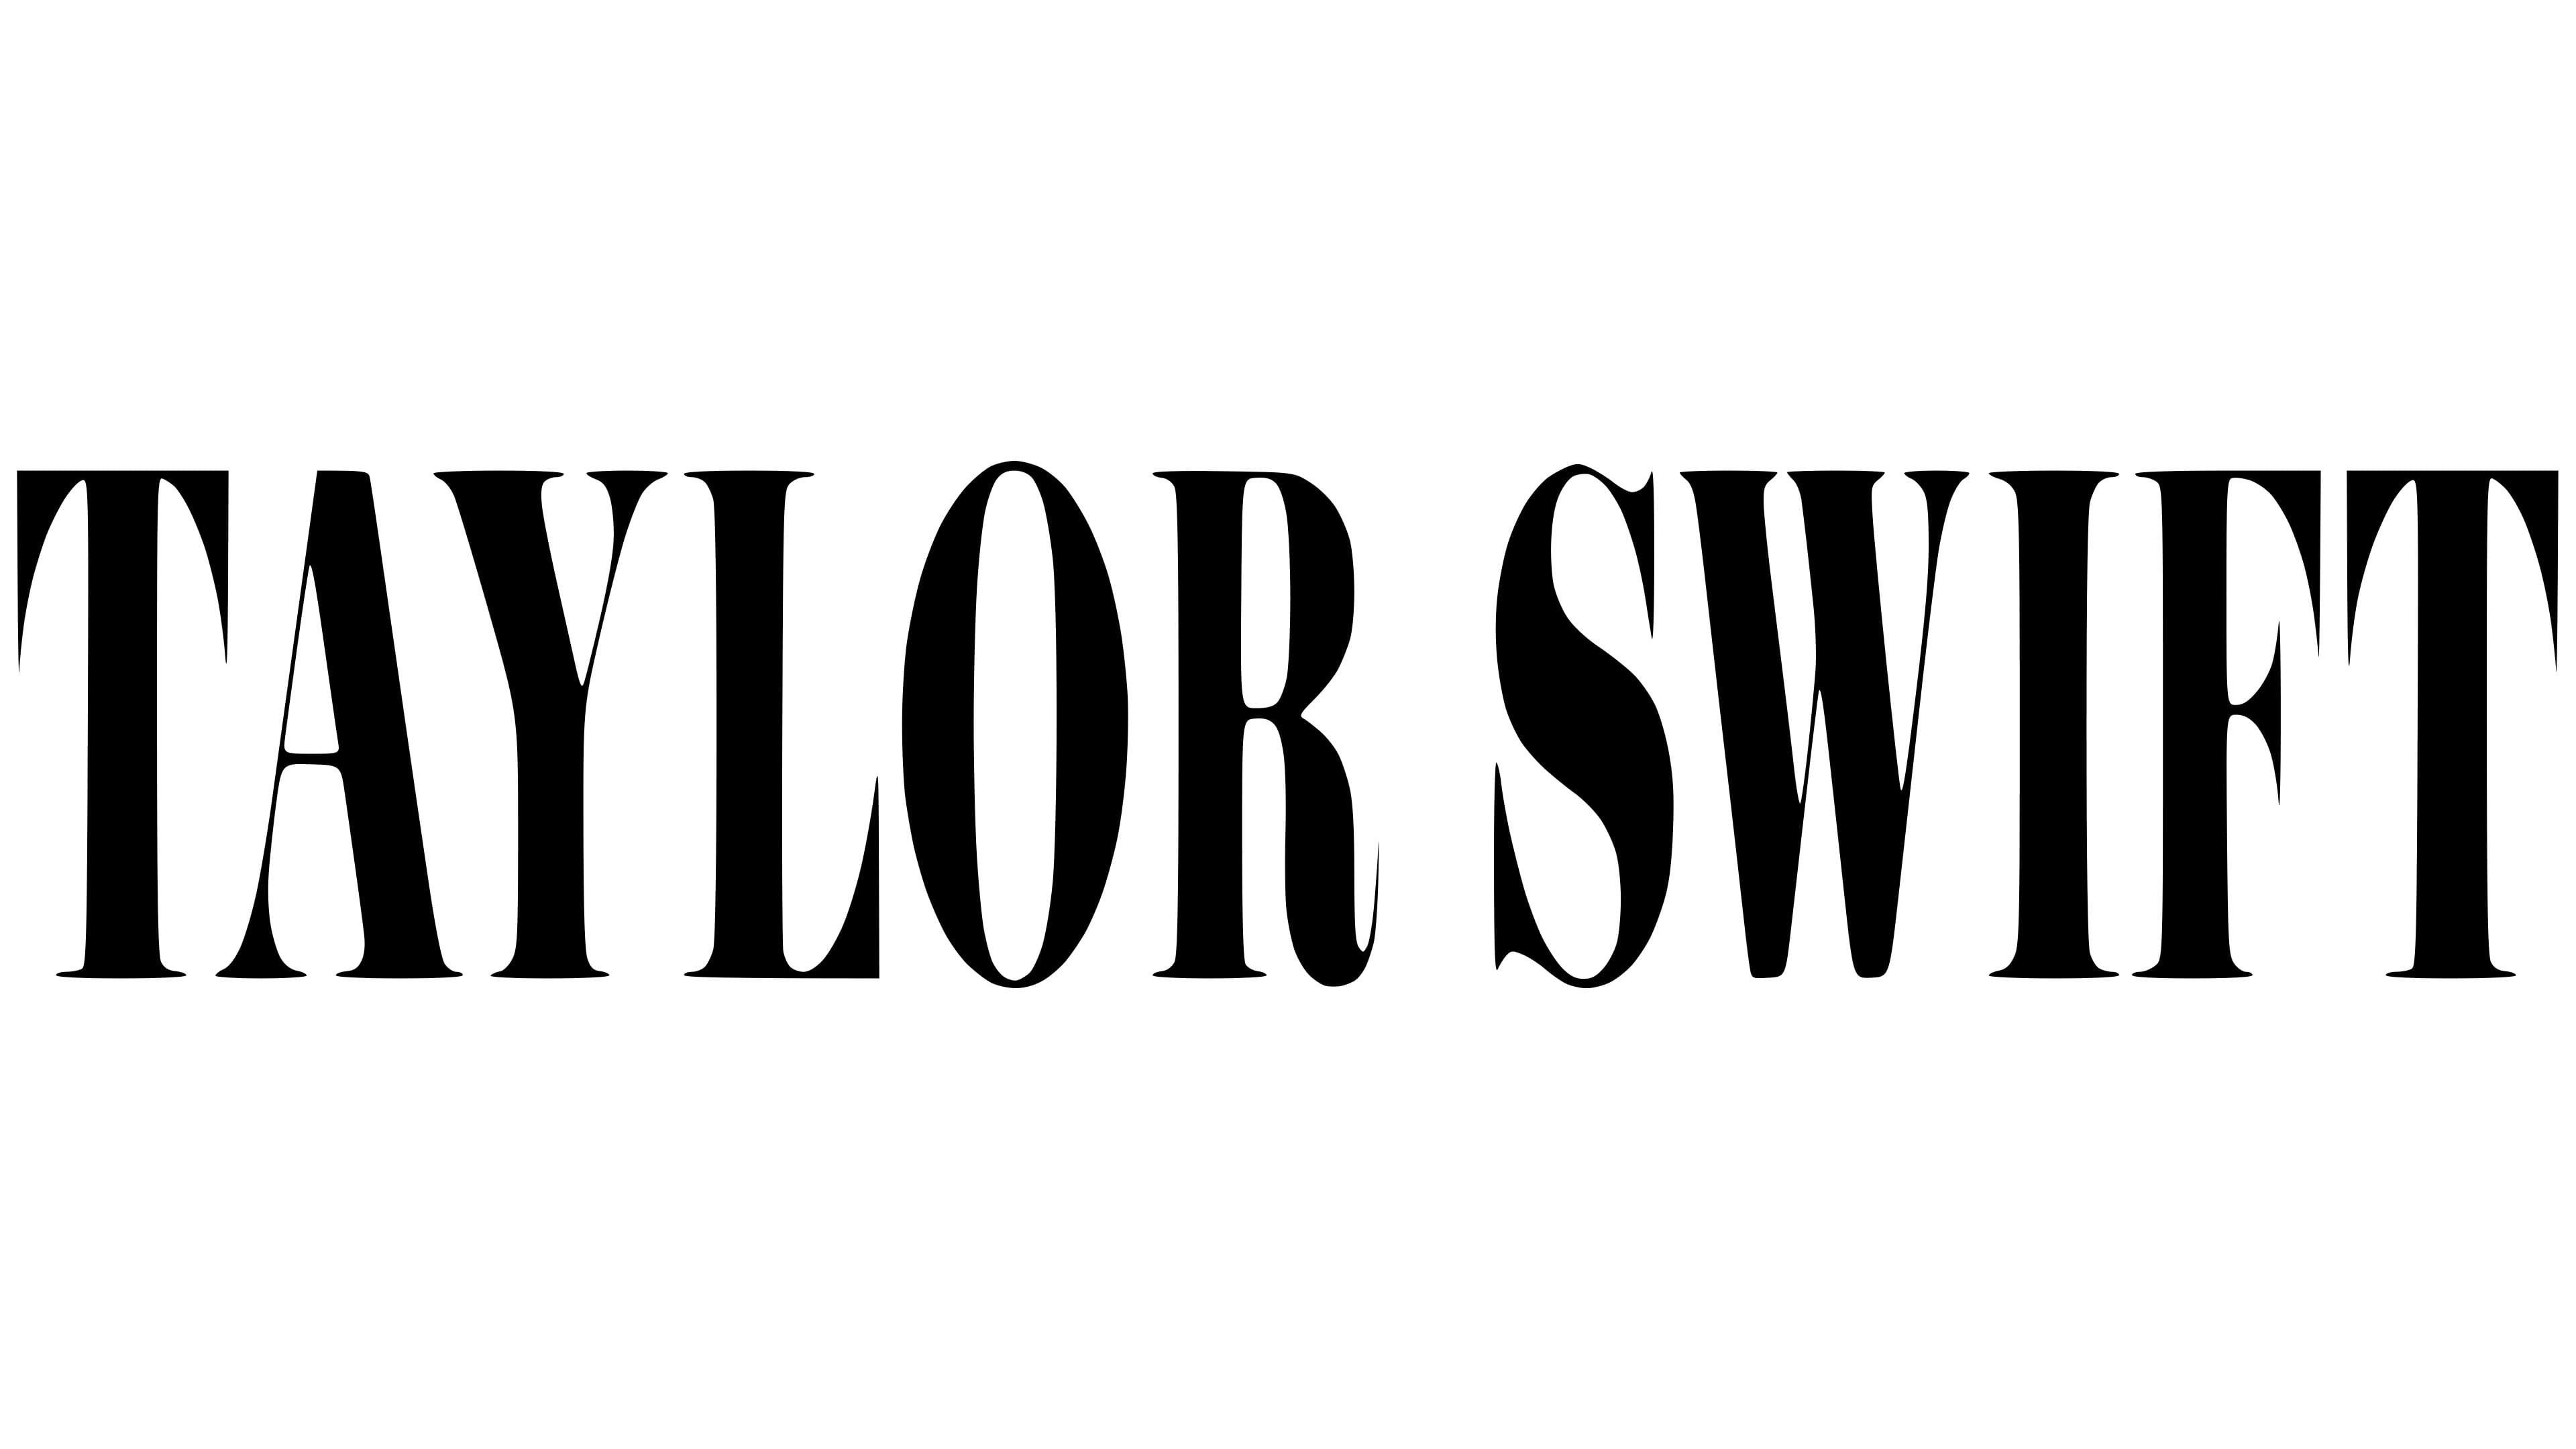 taylor swift logo png